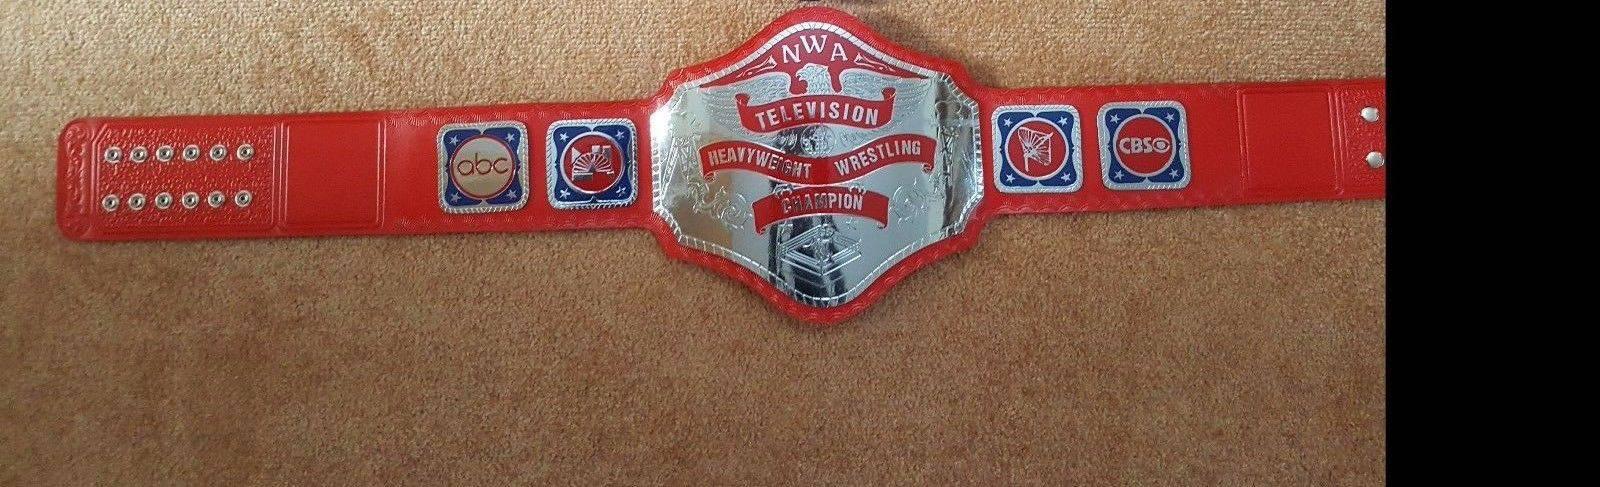 NWA TELEVISION HEAVYWEIGHT Championship Title Belt - Zees Belts